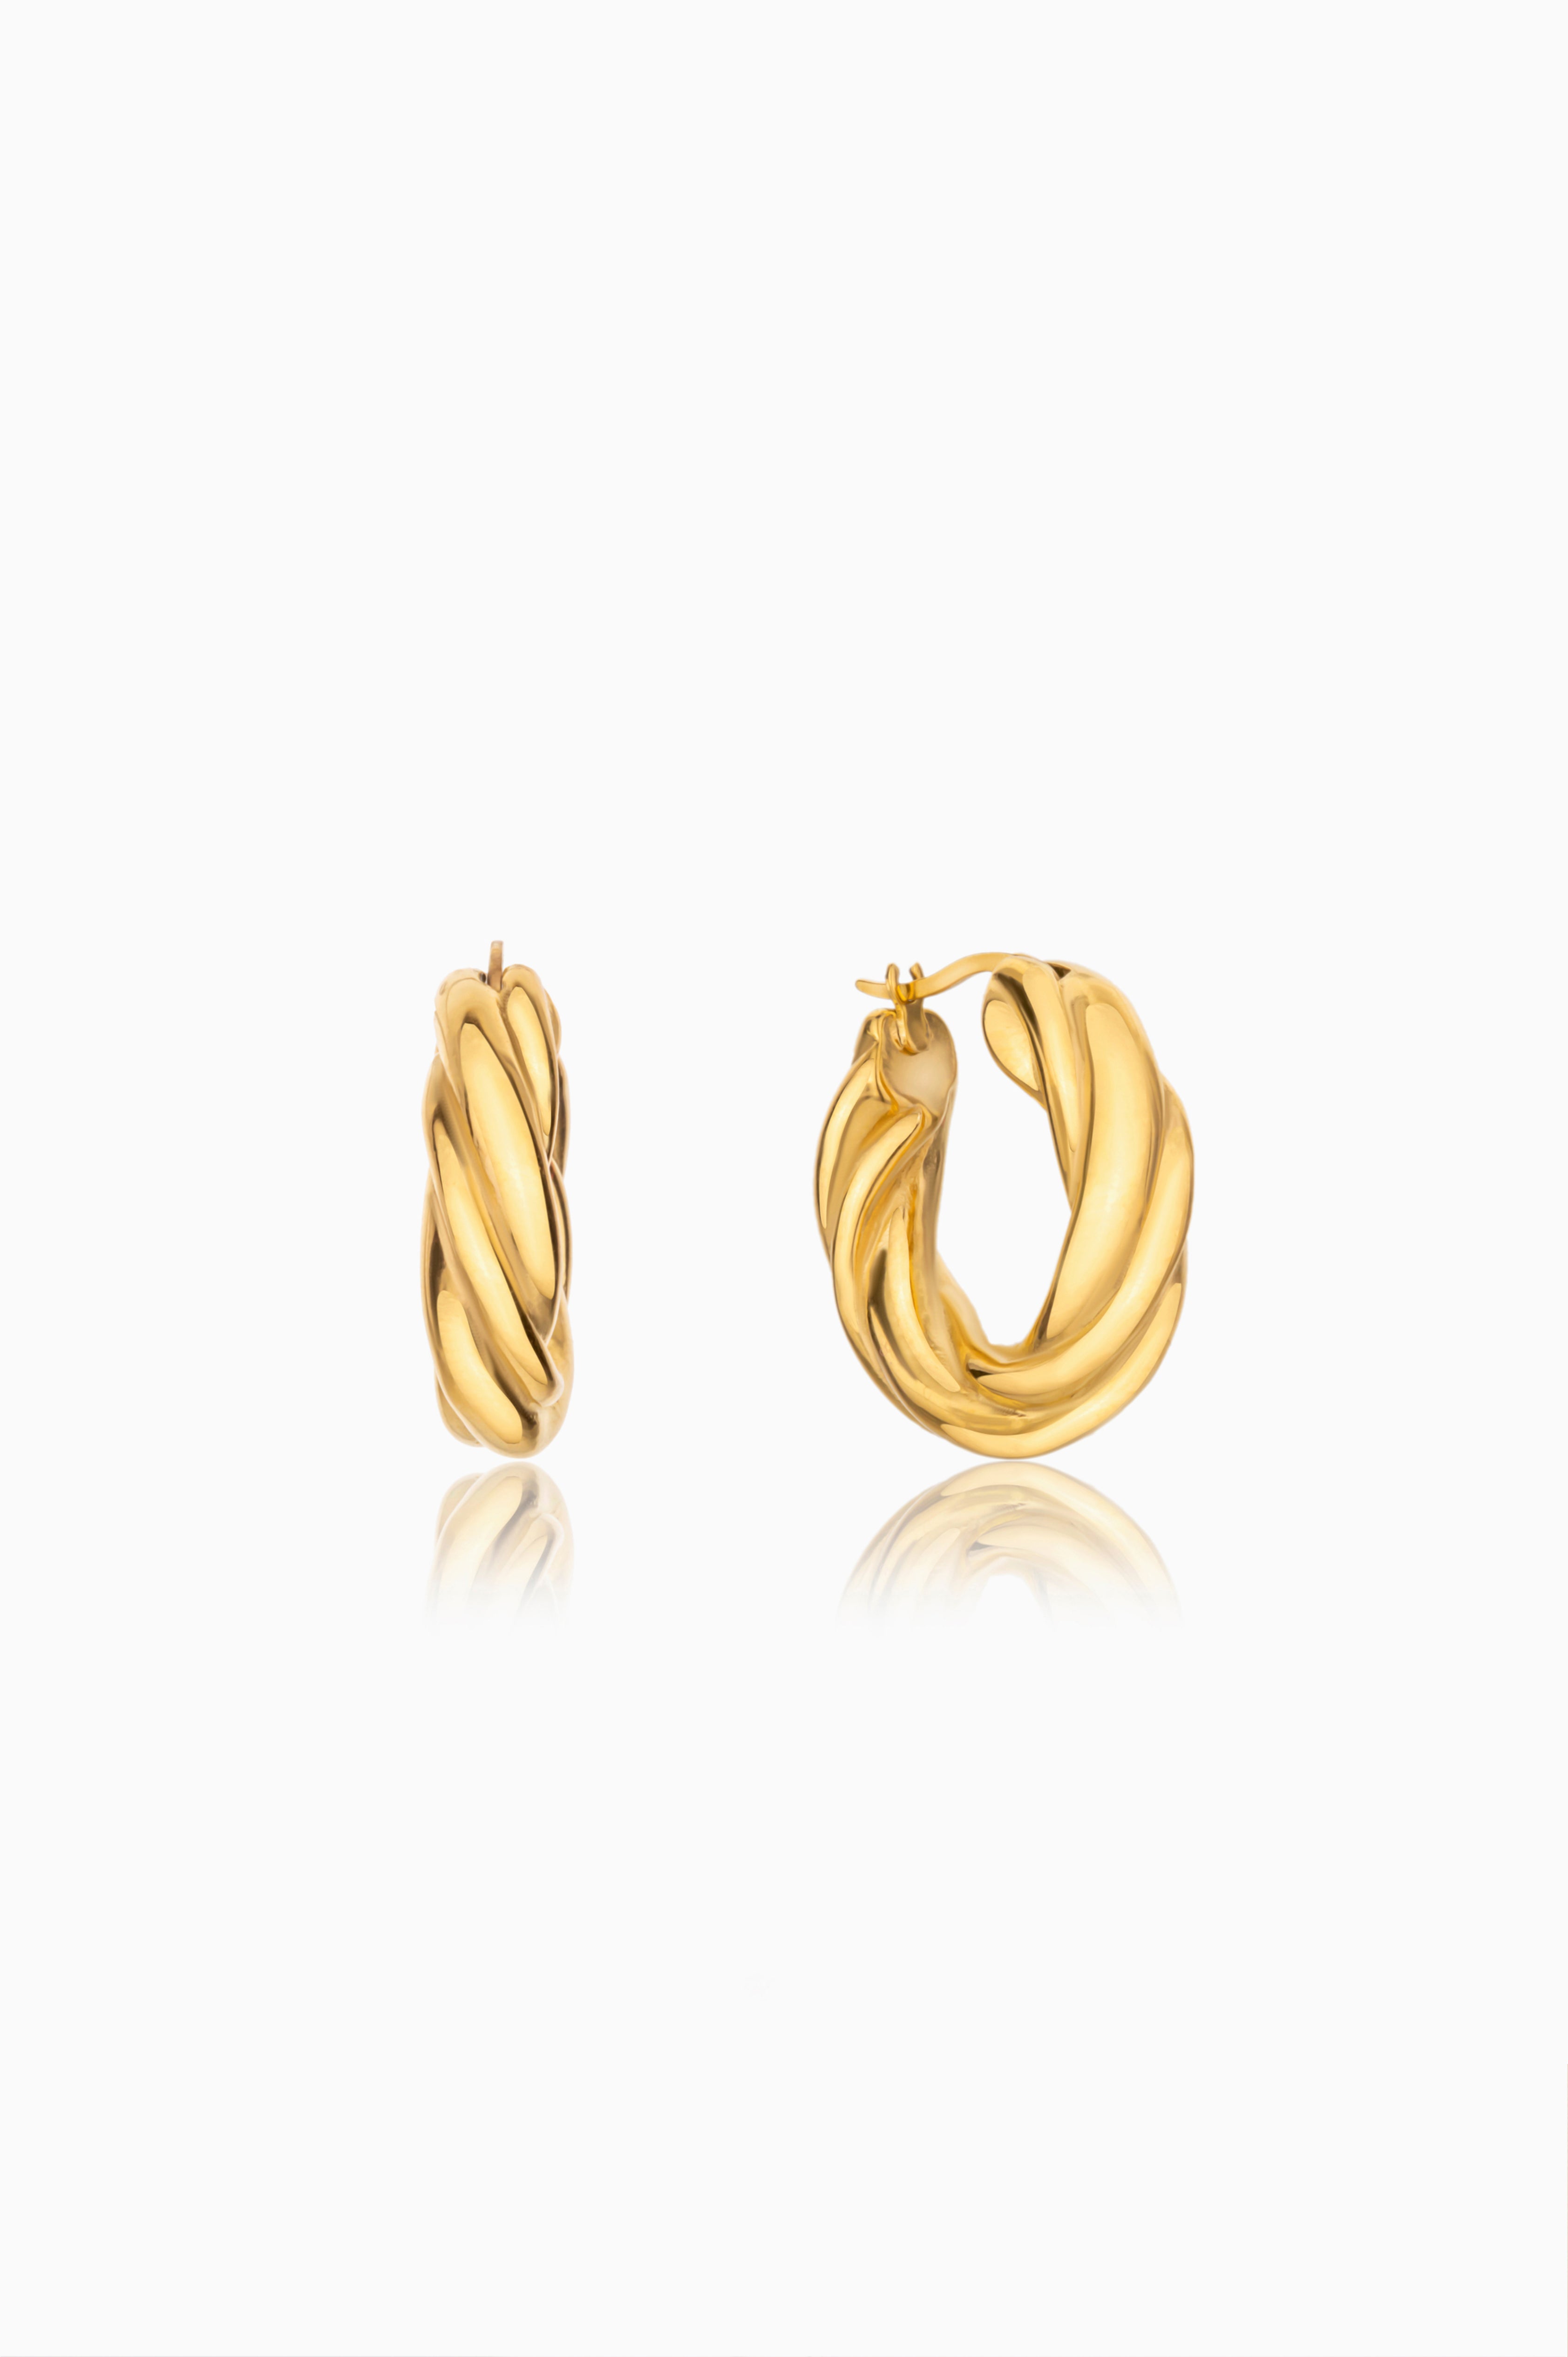 Gold-plated earrings TWISTED ROPE HOOP stainless steel